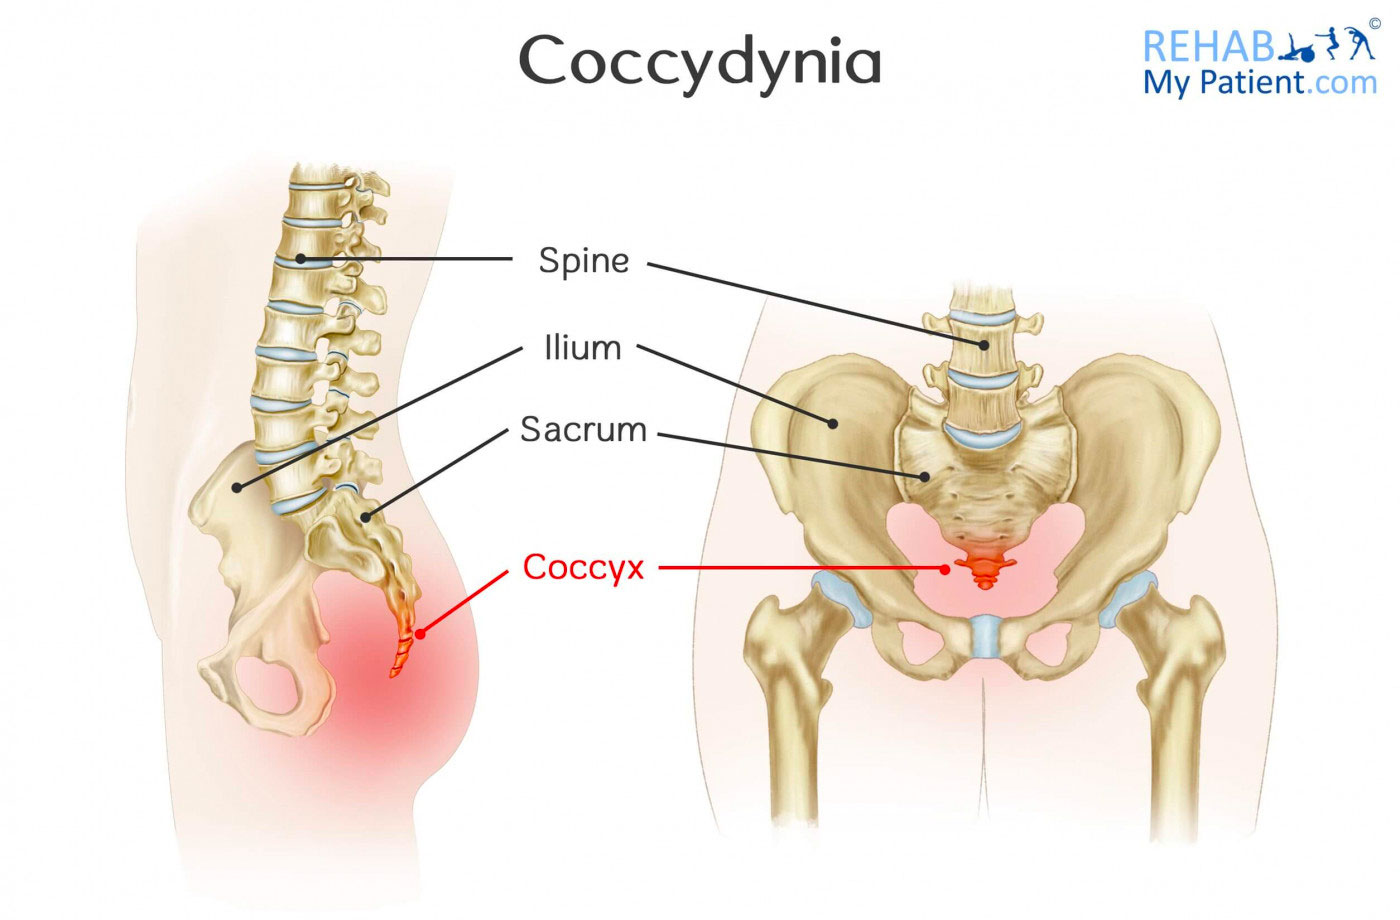 Diagram showing coccydnia